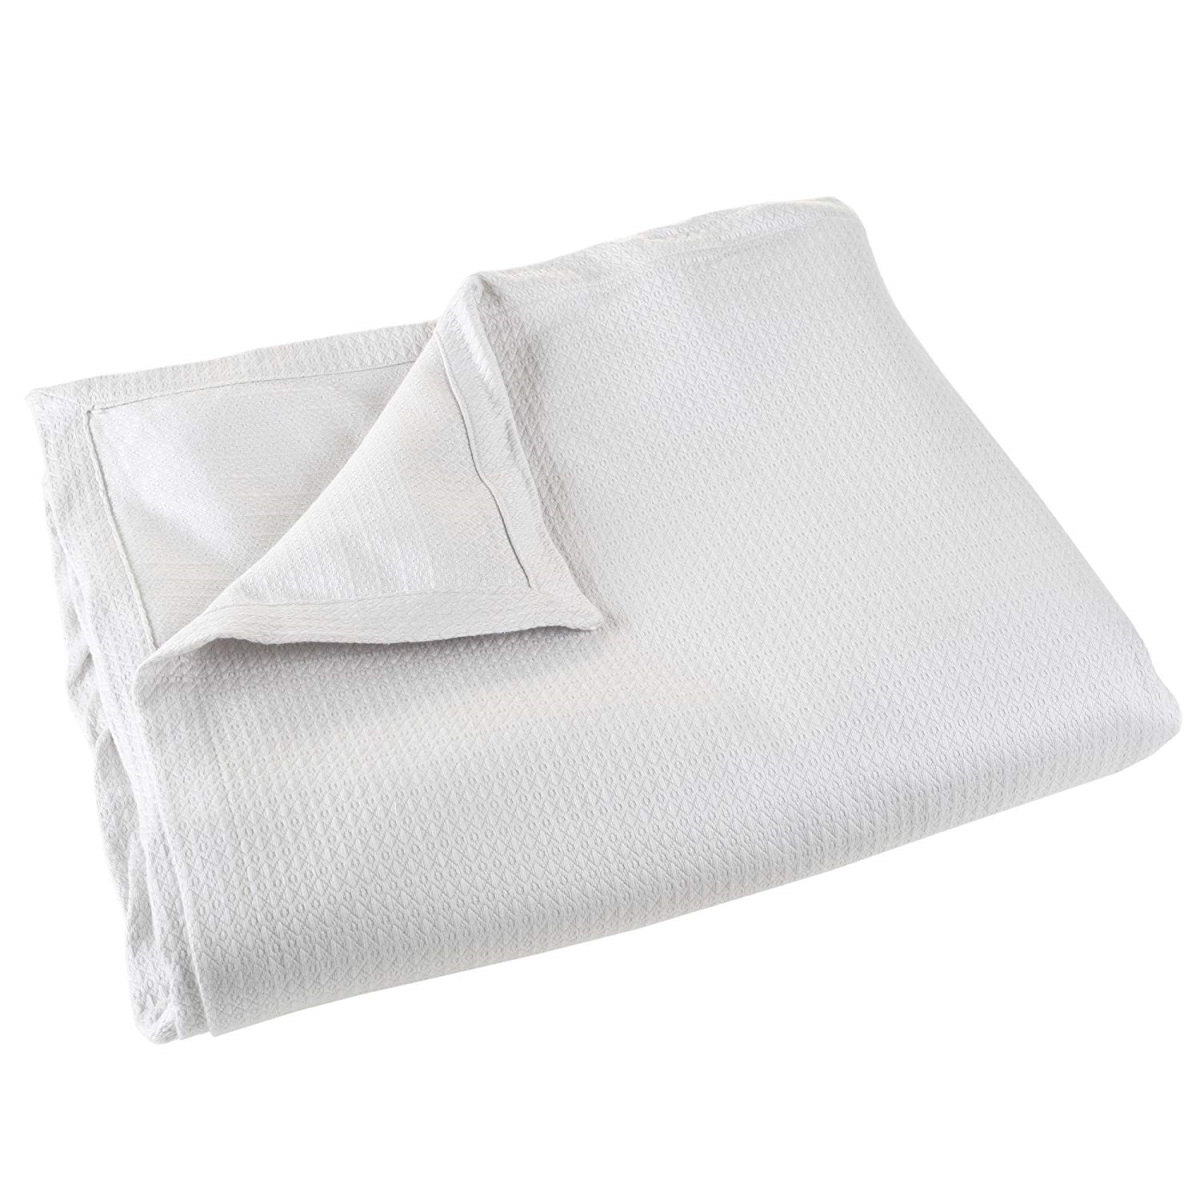 61a-43371 Soft Breathable 100 Percent Cotton Blanket, Platinum - Twin Size